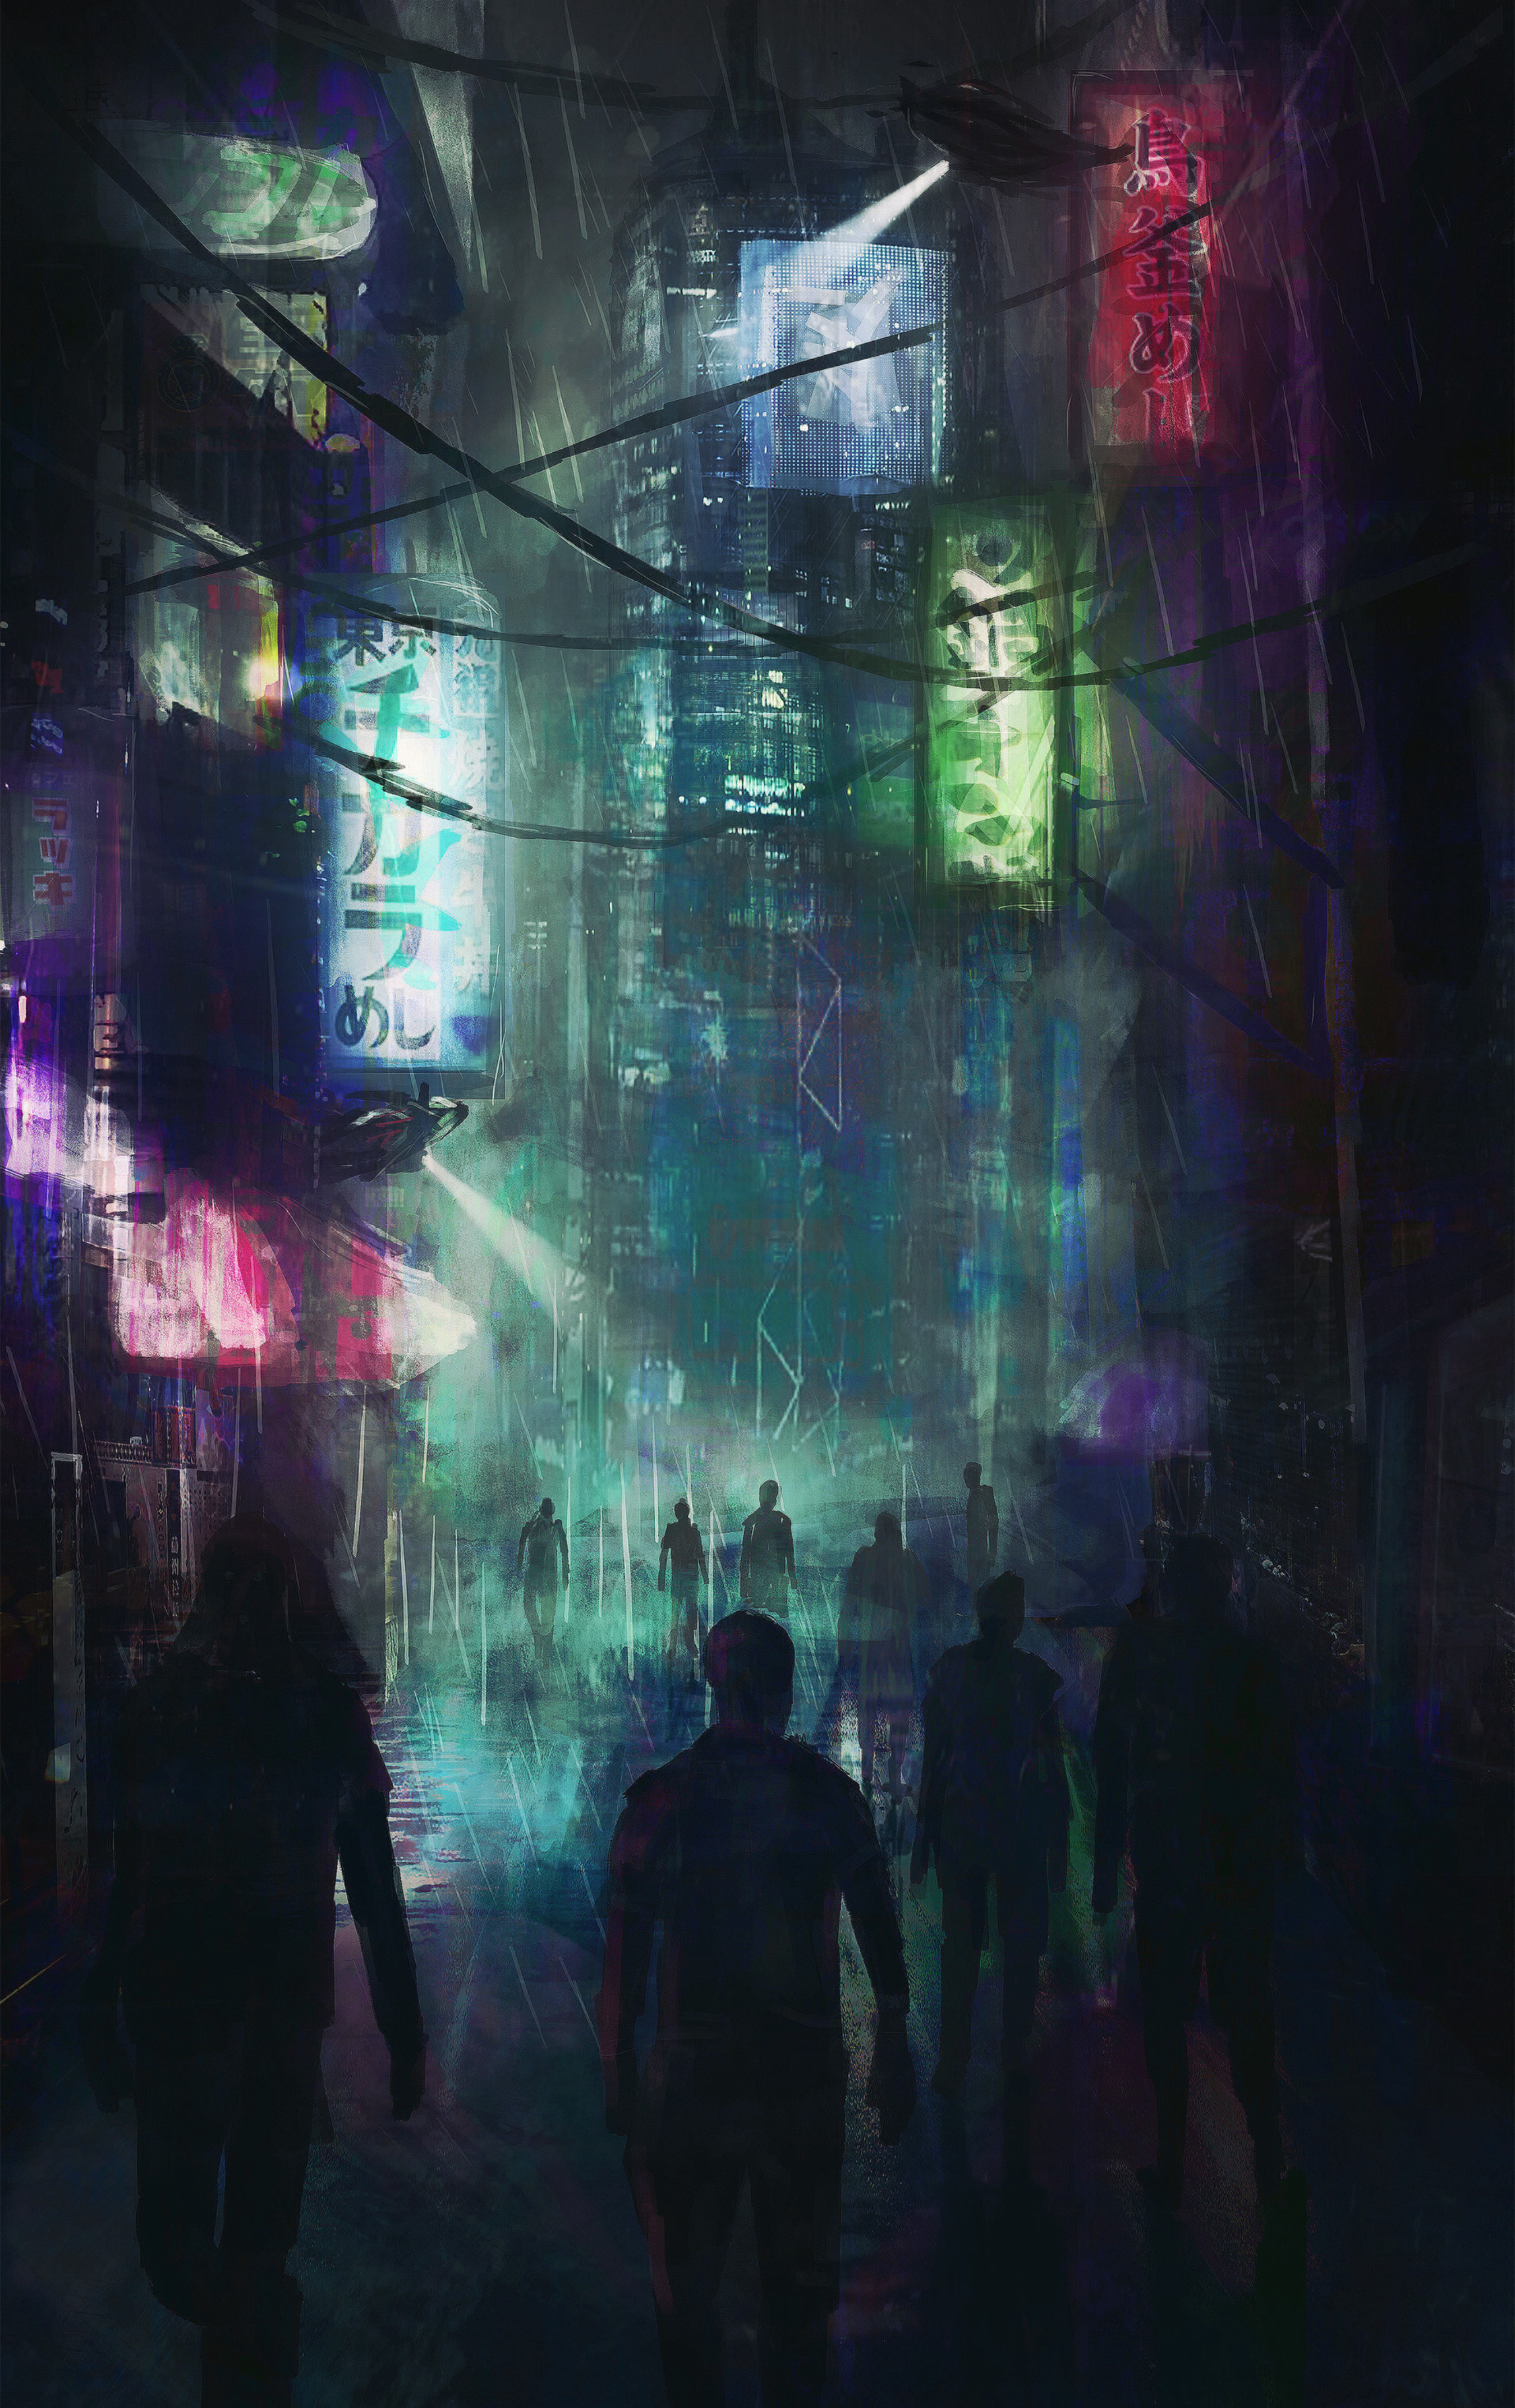 cyberpunk, night city, art, city, silhouettes, crowd